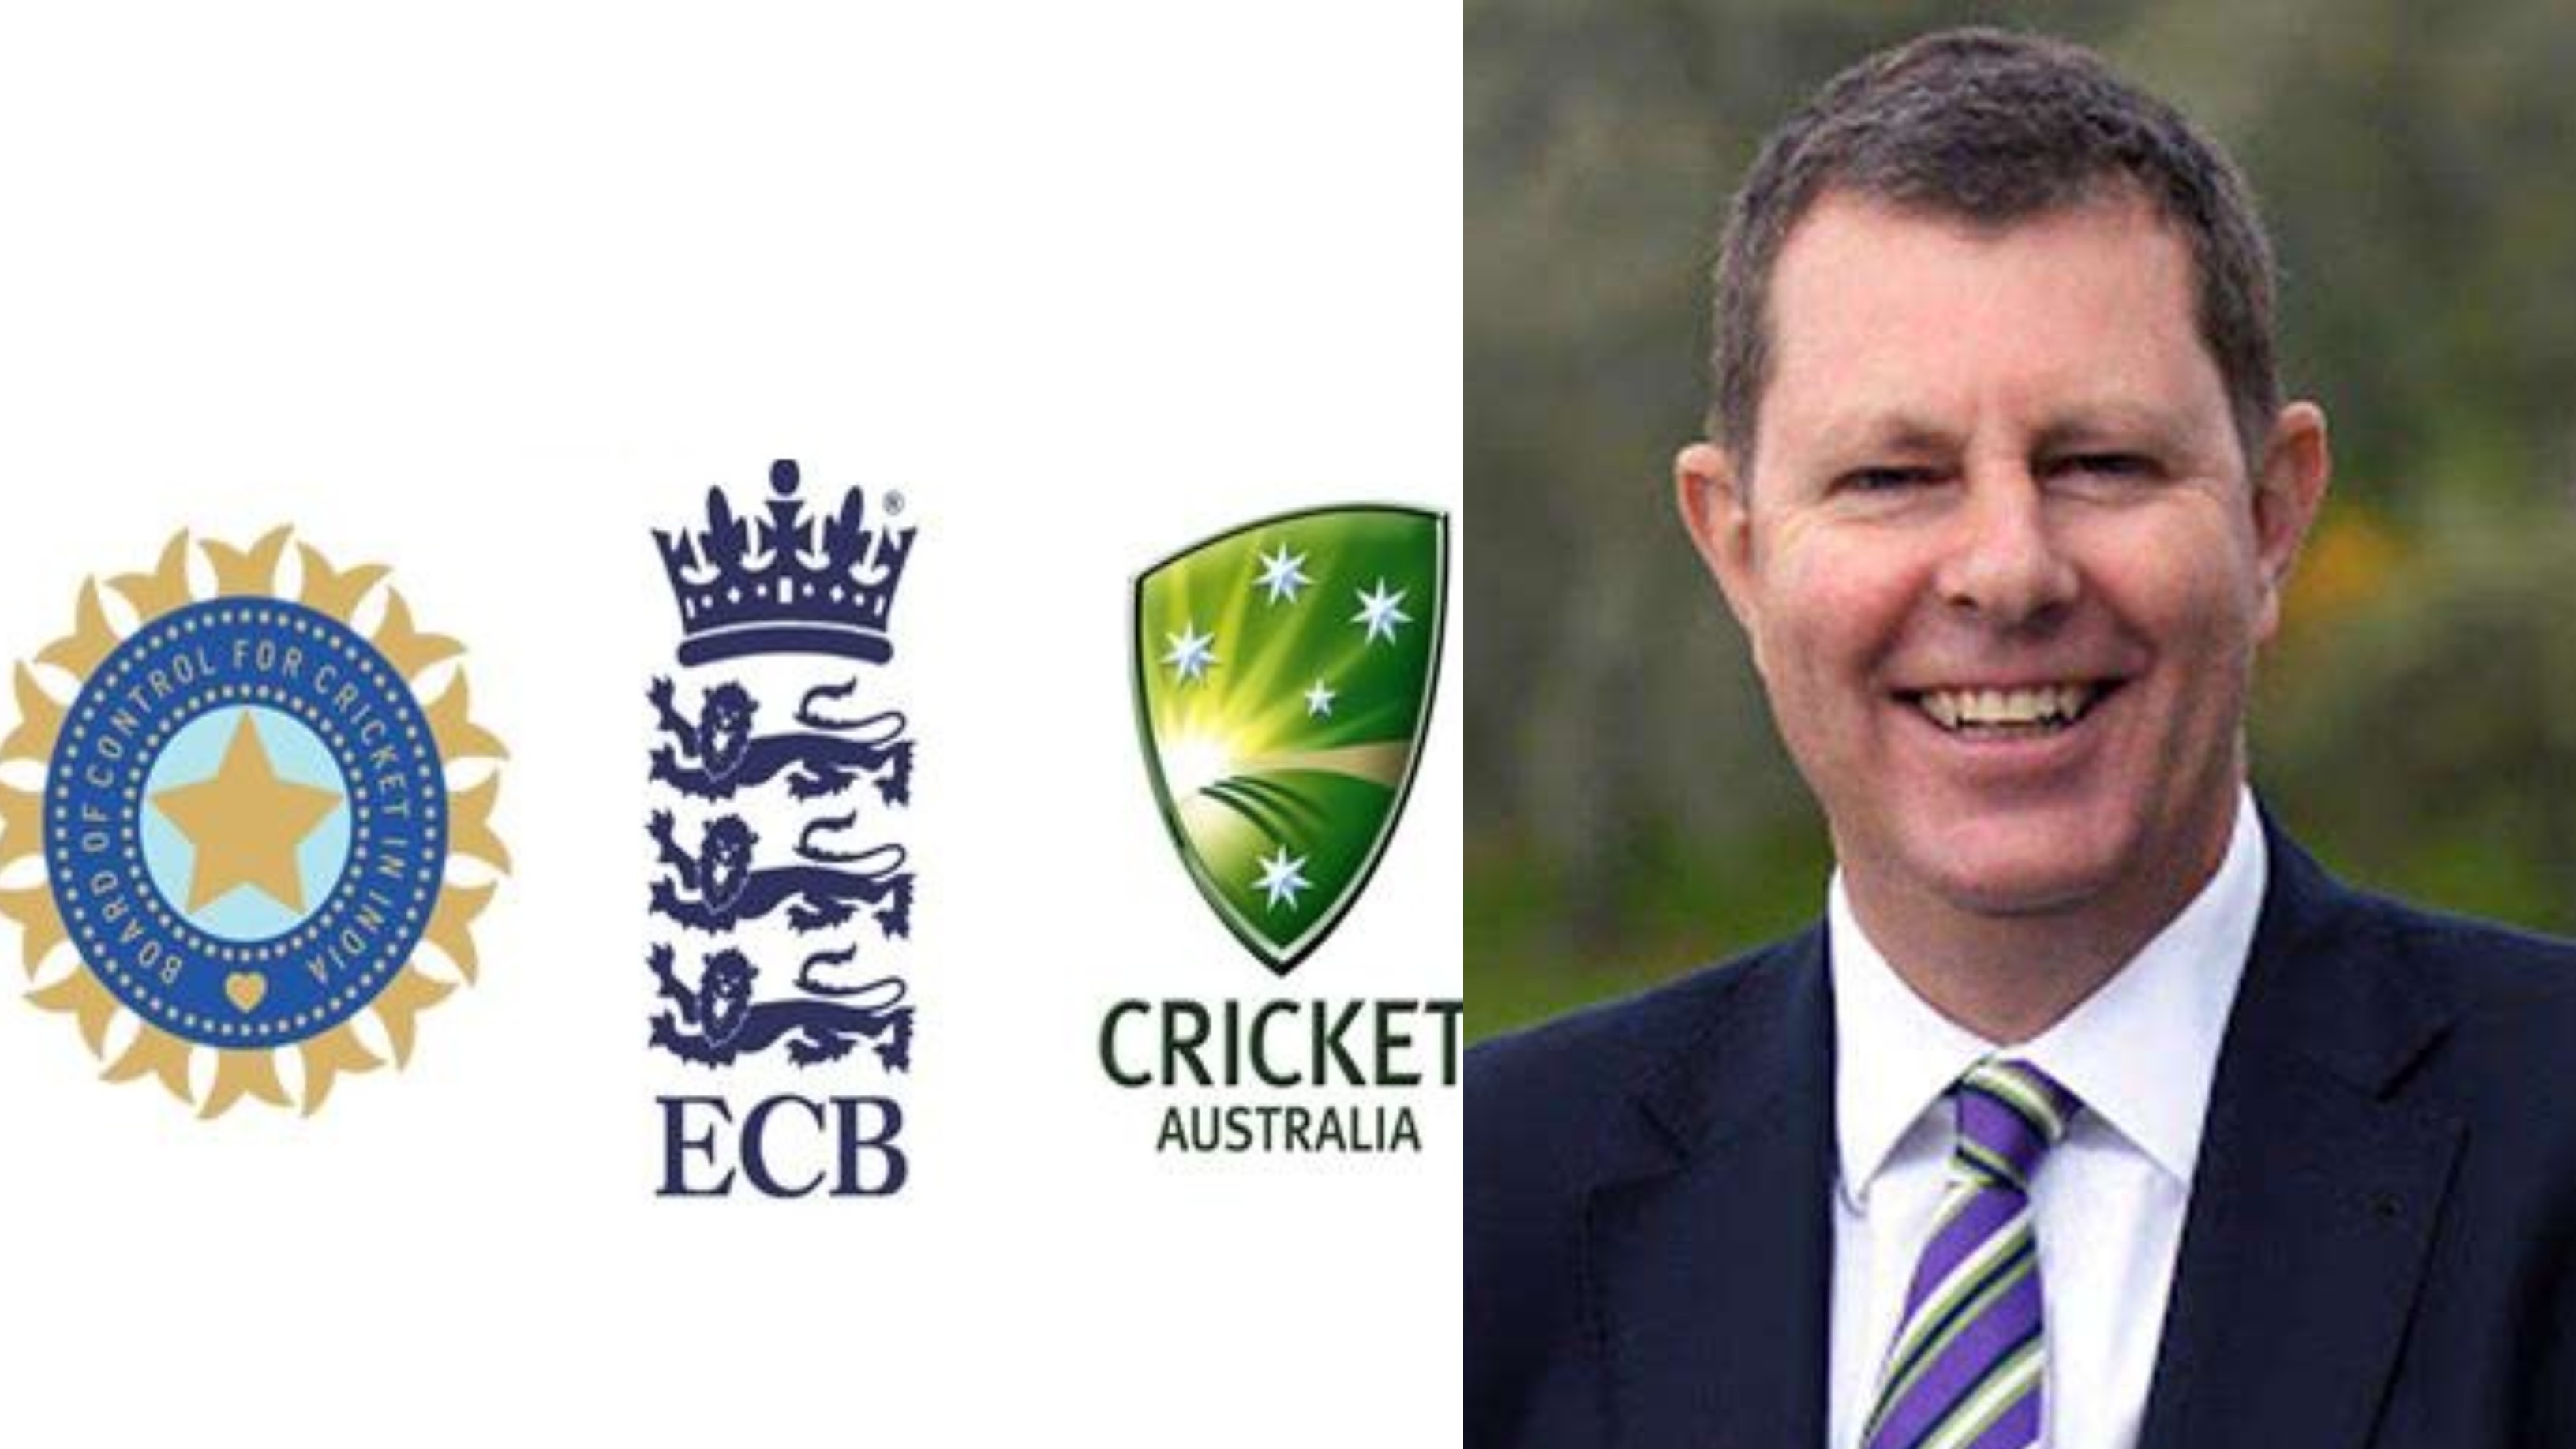 New ICC Chairman Greg Barclay says 